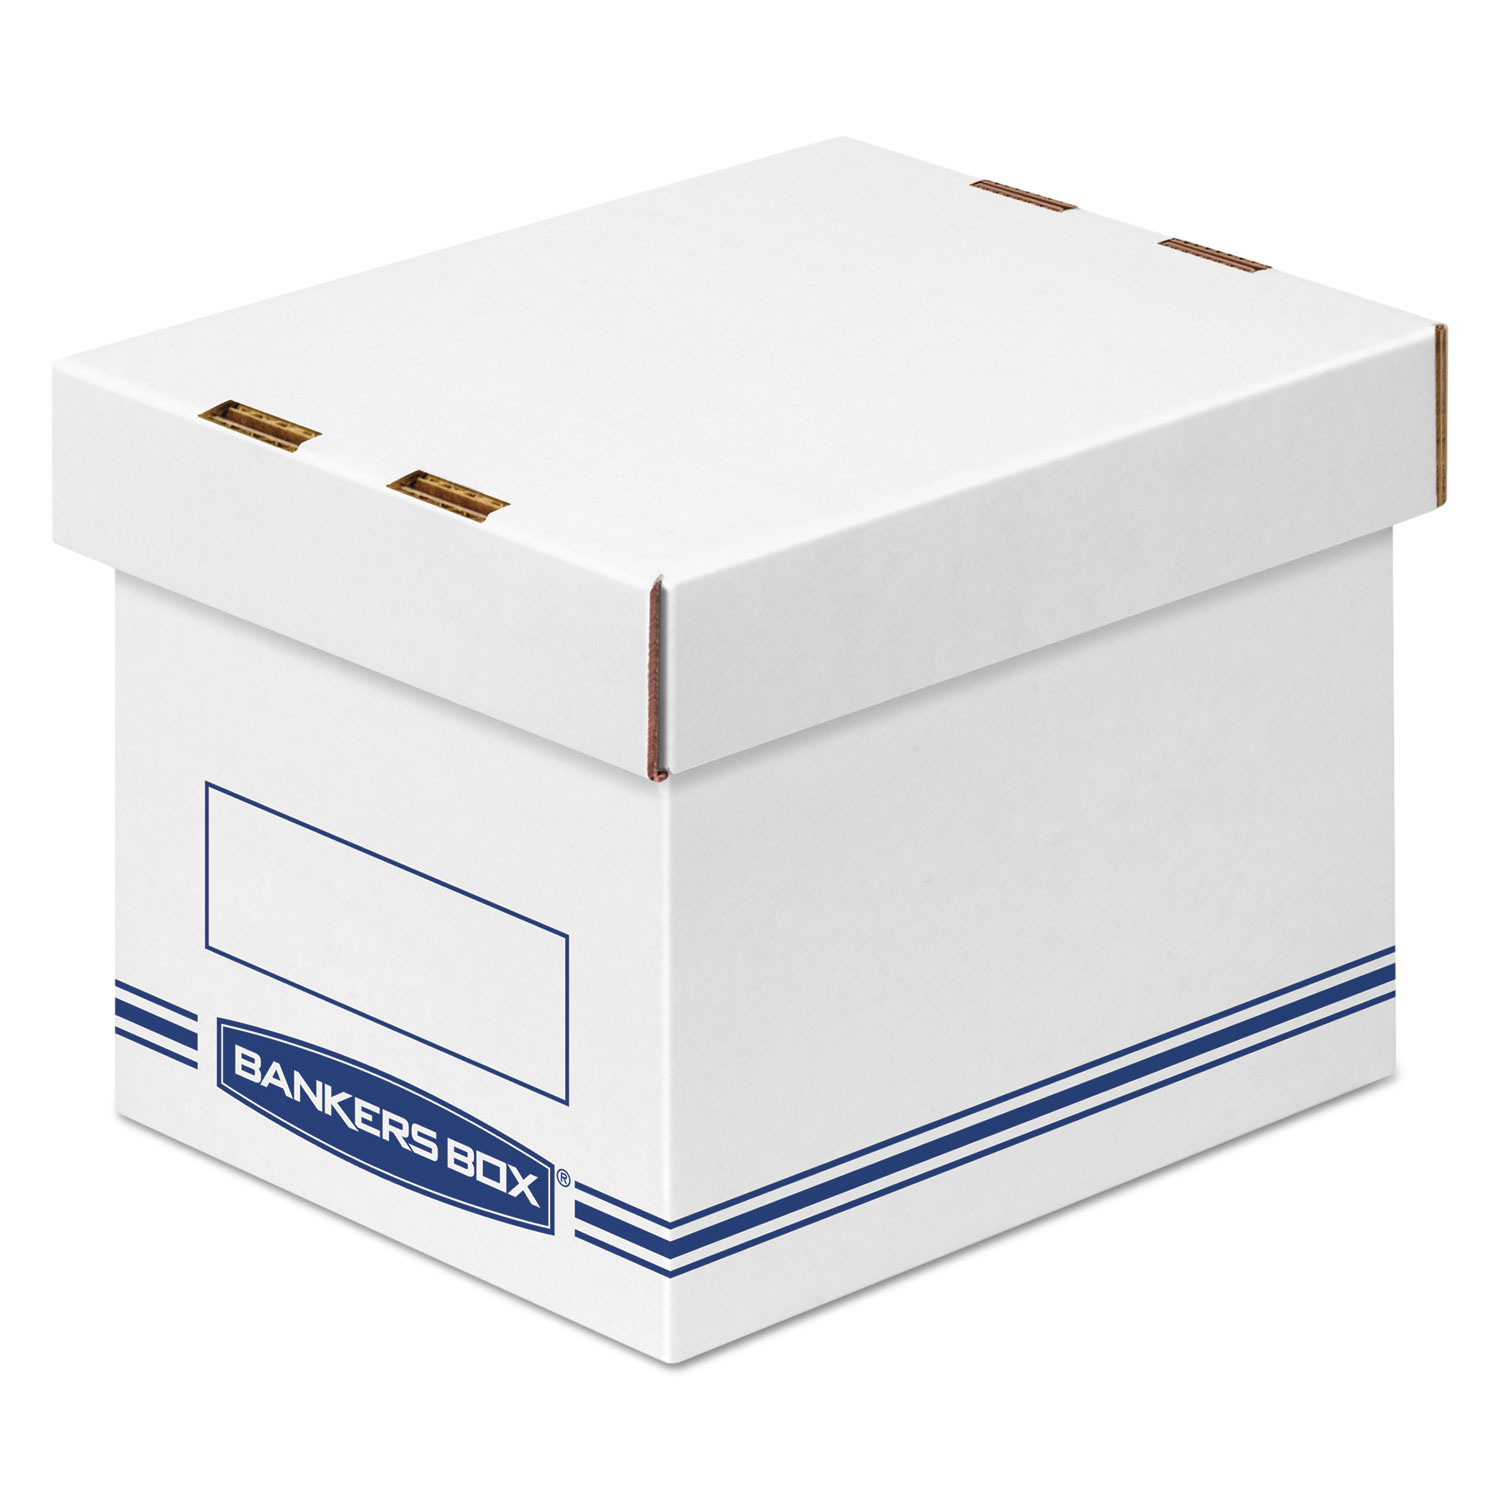  Bankers Box 4662101 Organizer Storage Boxes, Small, 6.25 x 8.13 x 6.5, White/Blue, 12/Carton (FEL4662101) 